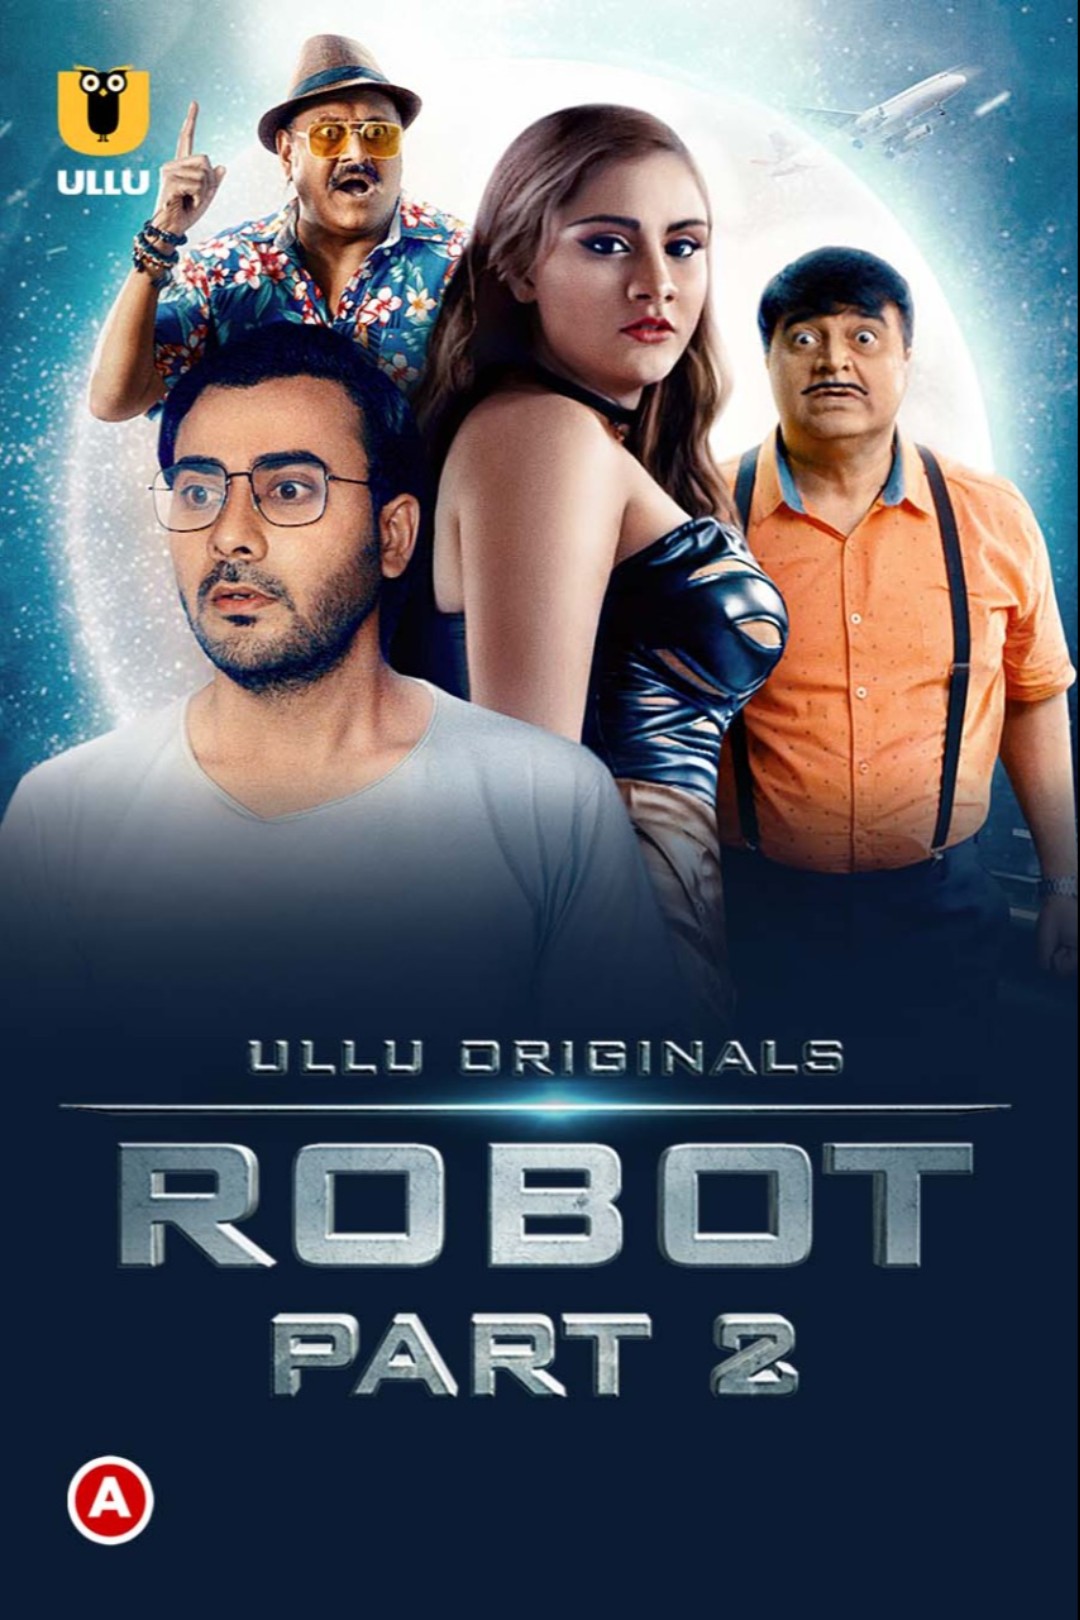 Robot (Part 2) 2021 S01 Hindi Ullu Originals Complete Web Series Download | HDRip | 1080p | 720p | 480p – 1.3GB | 615MB | 320MB